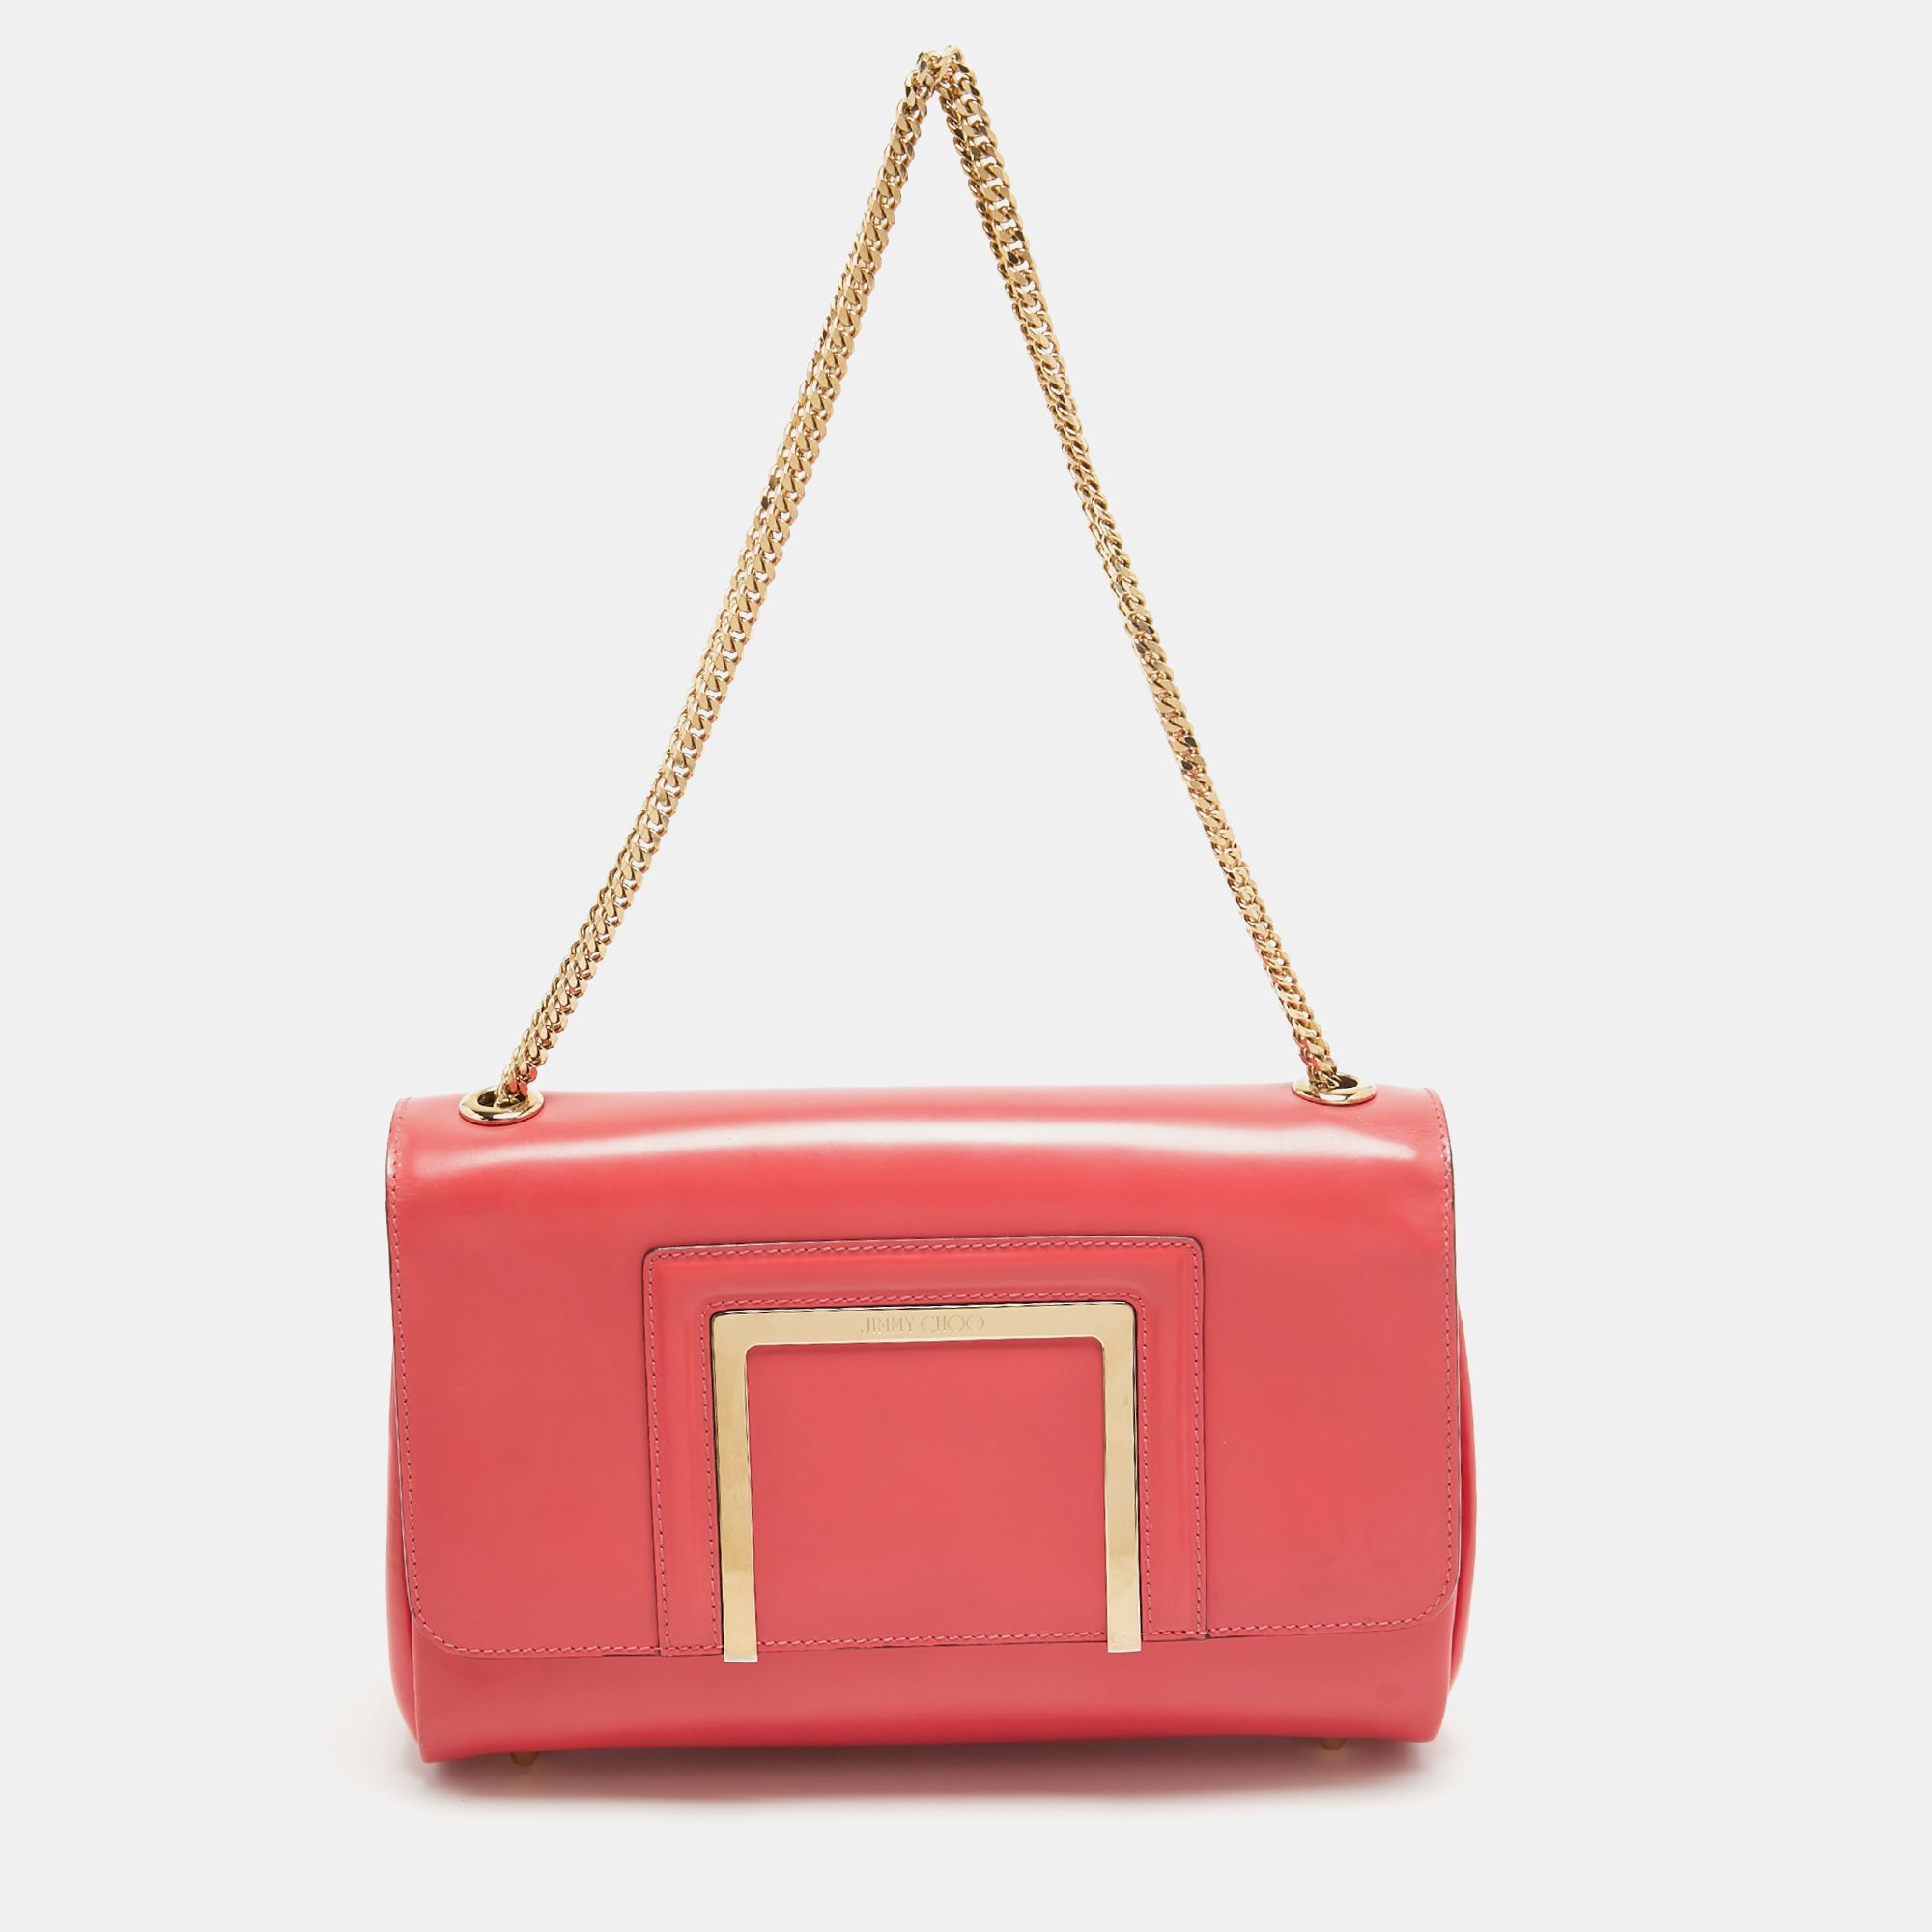 Pre-owned Jimmy Choo Coral Pink Leather Alba Shoulder Bag